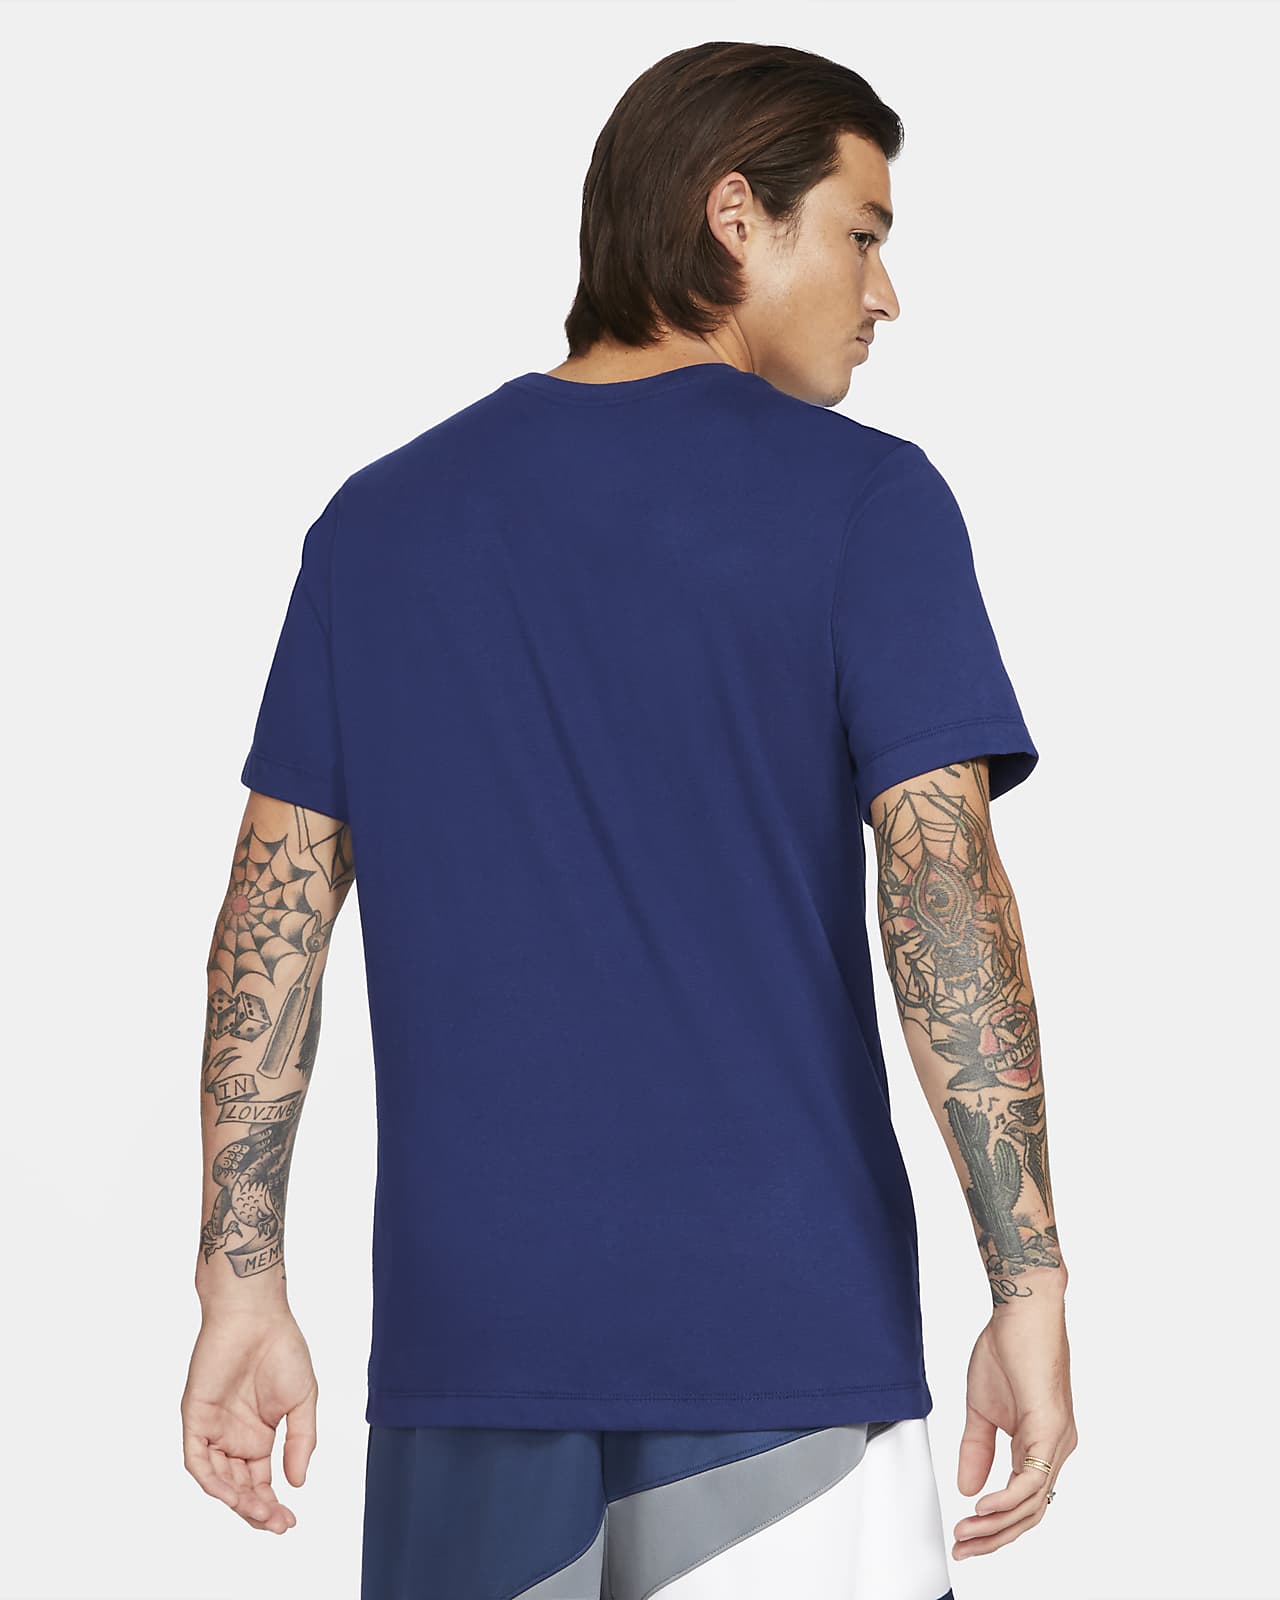 nike blue void shirt